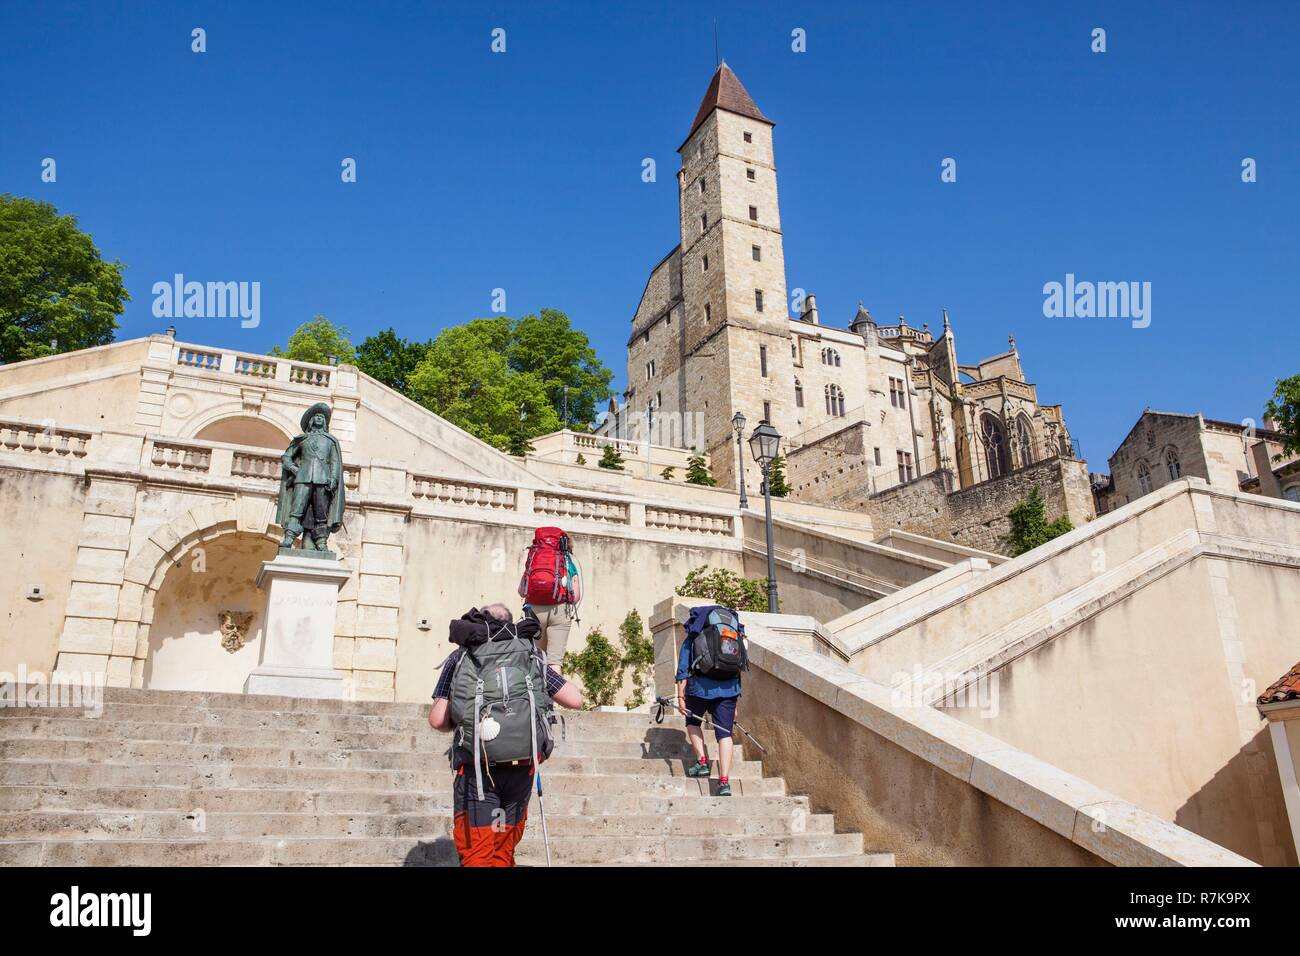 Francia, GERS, AUCH, fermata su El Camino de Santiago, Tour d'Armagnac e l'Escalier Monumental Foto Stock